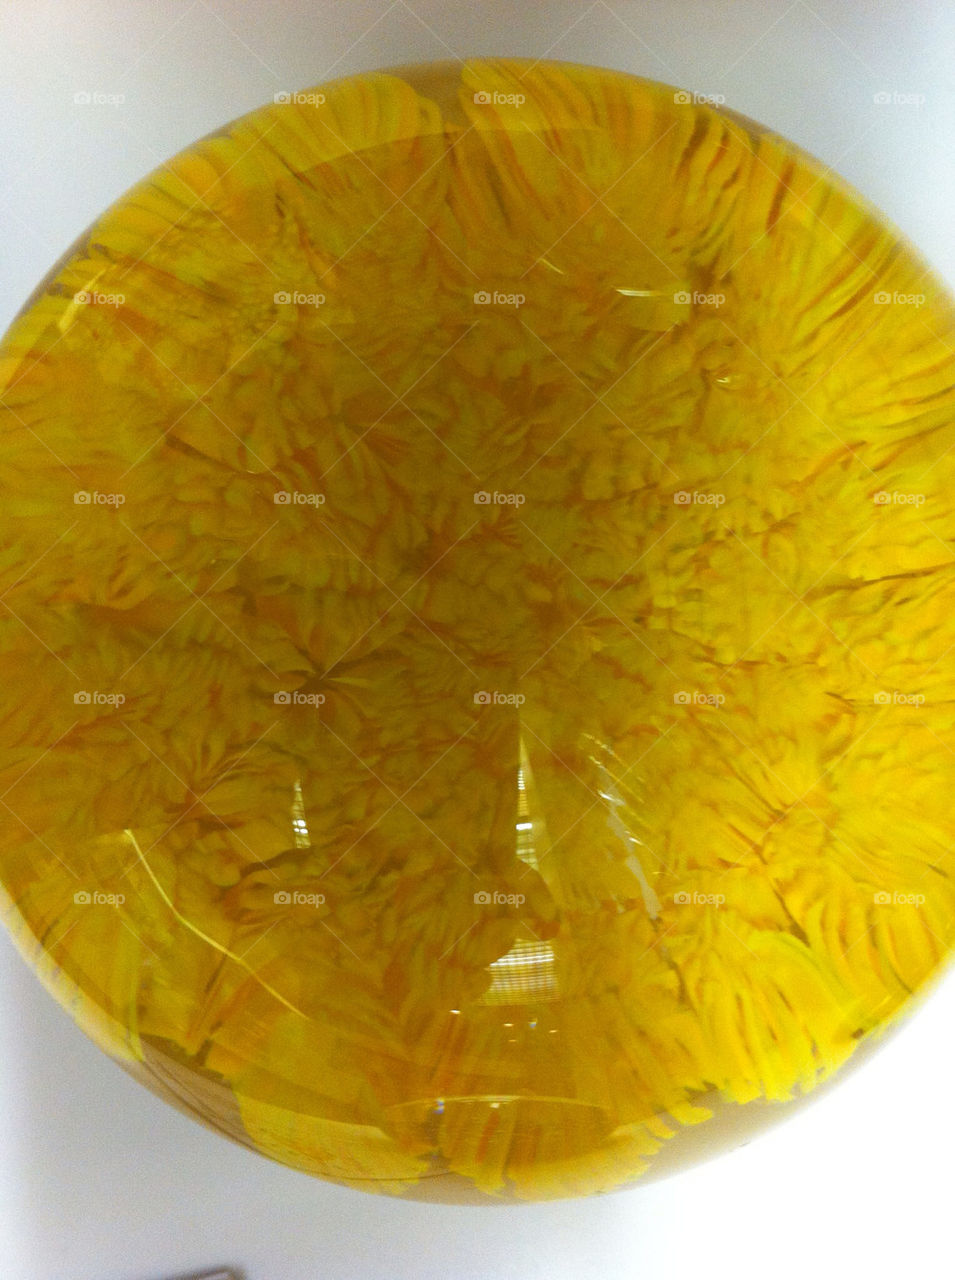 yellow glass by tplips01